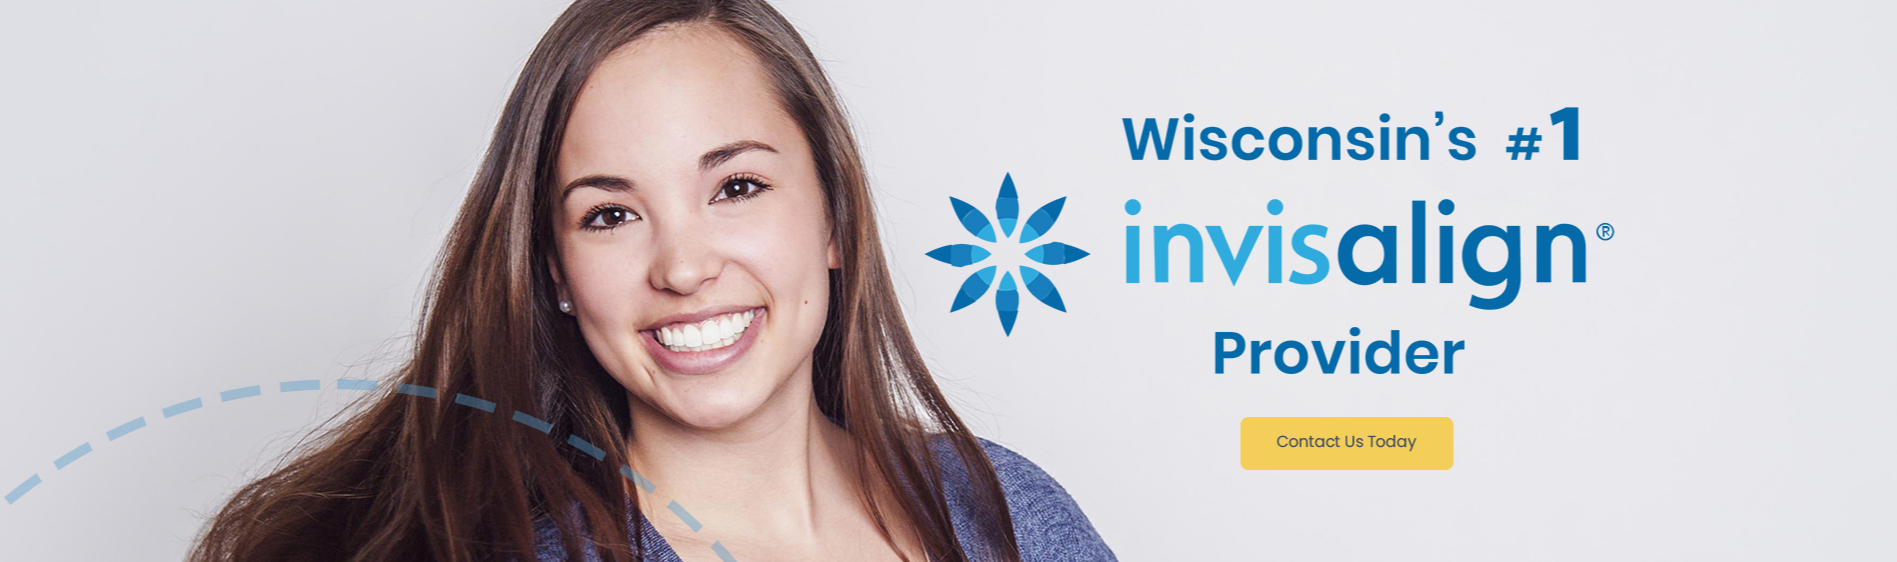 wisconsin's #1 Invisalign provider